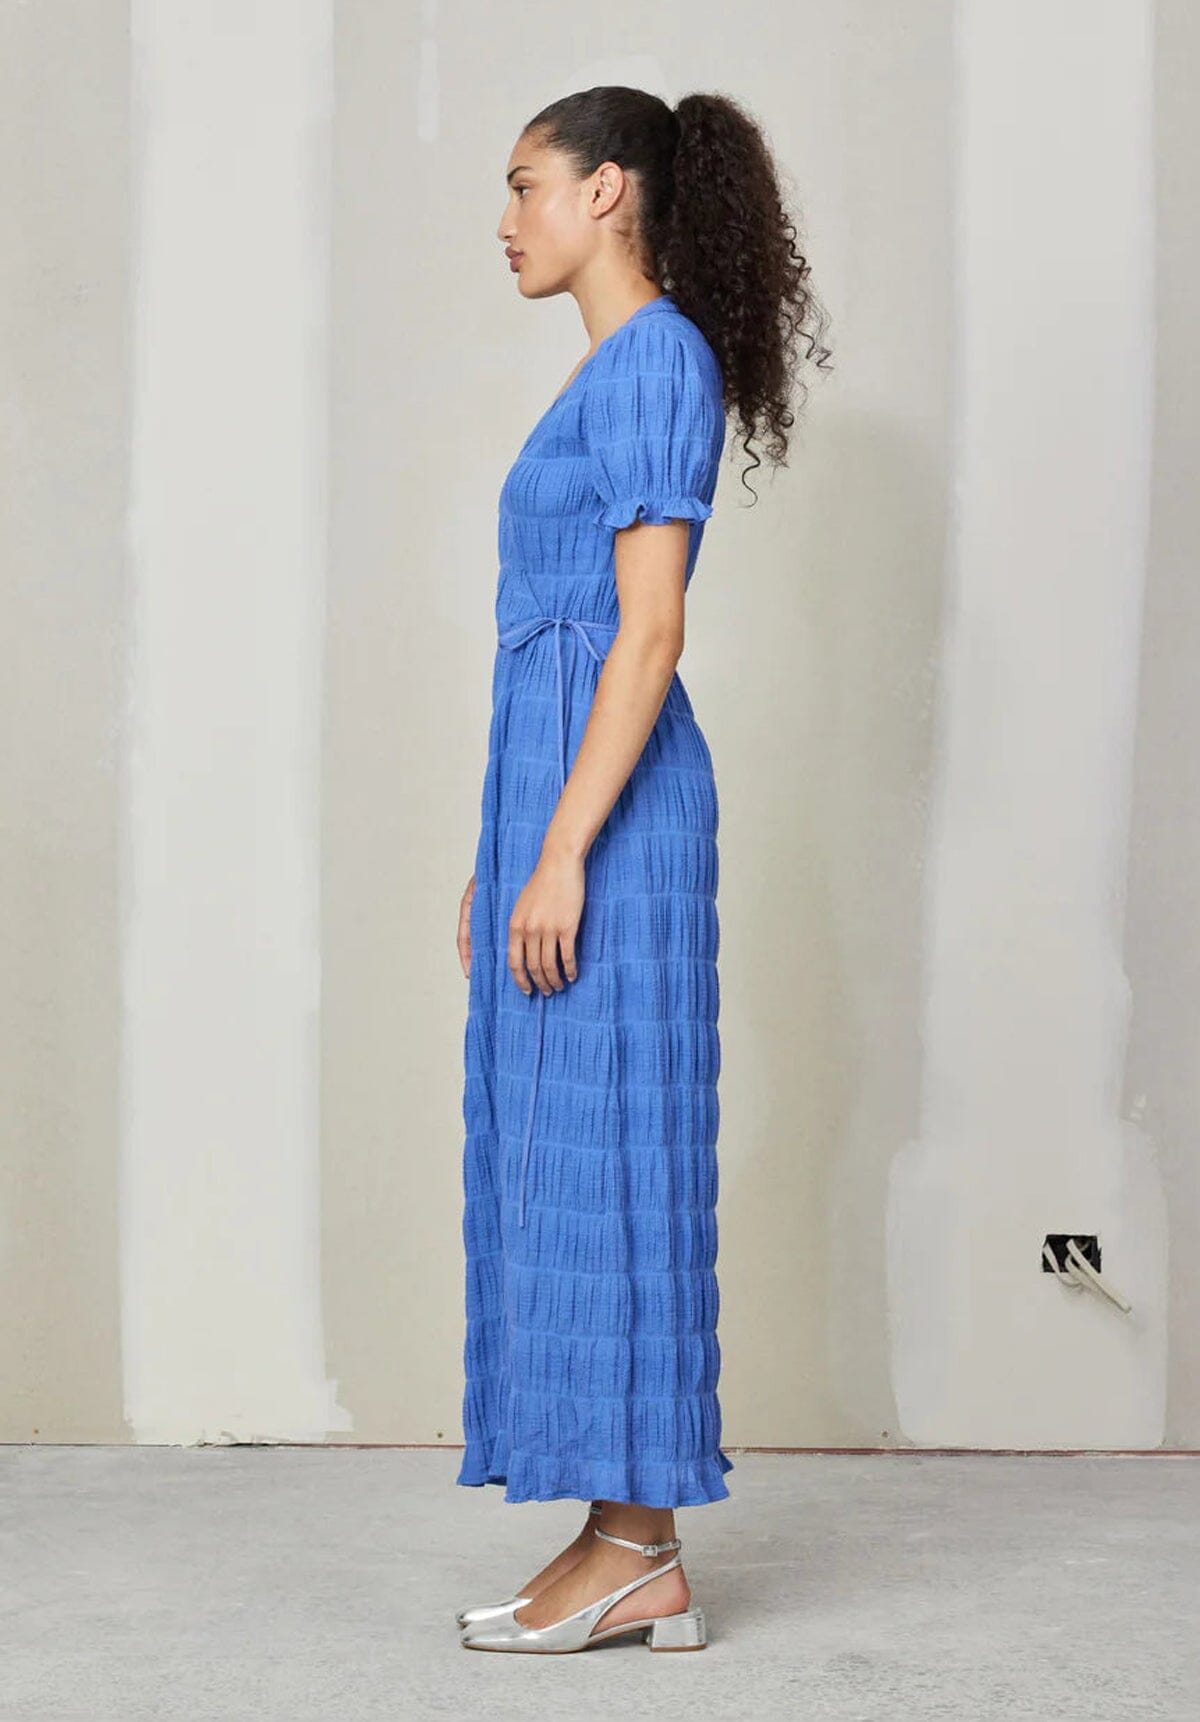 Mirella Short Sleeve Wrap Dress Periwinkle Clothing RUBY 